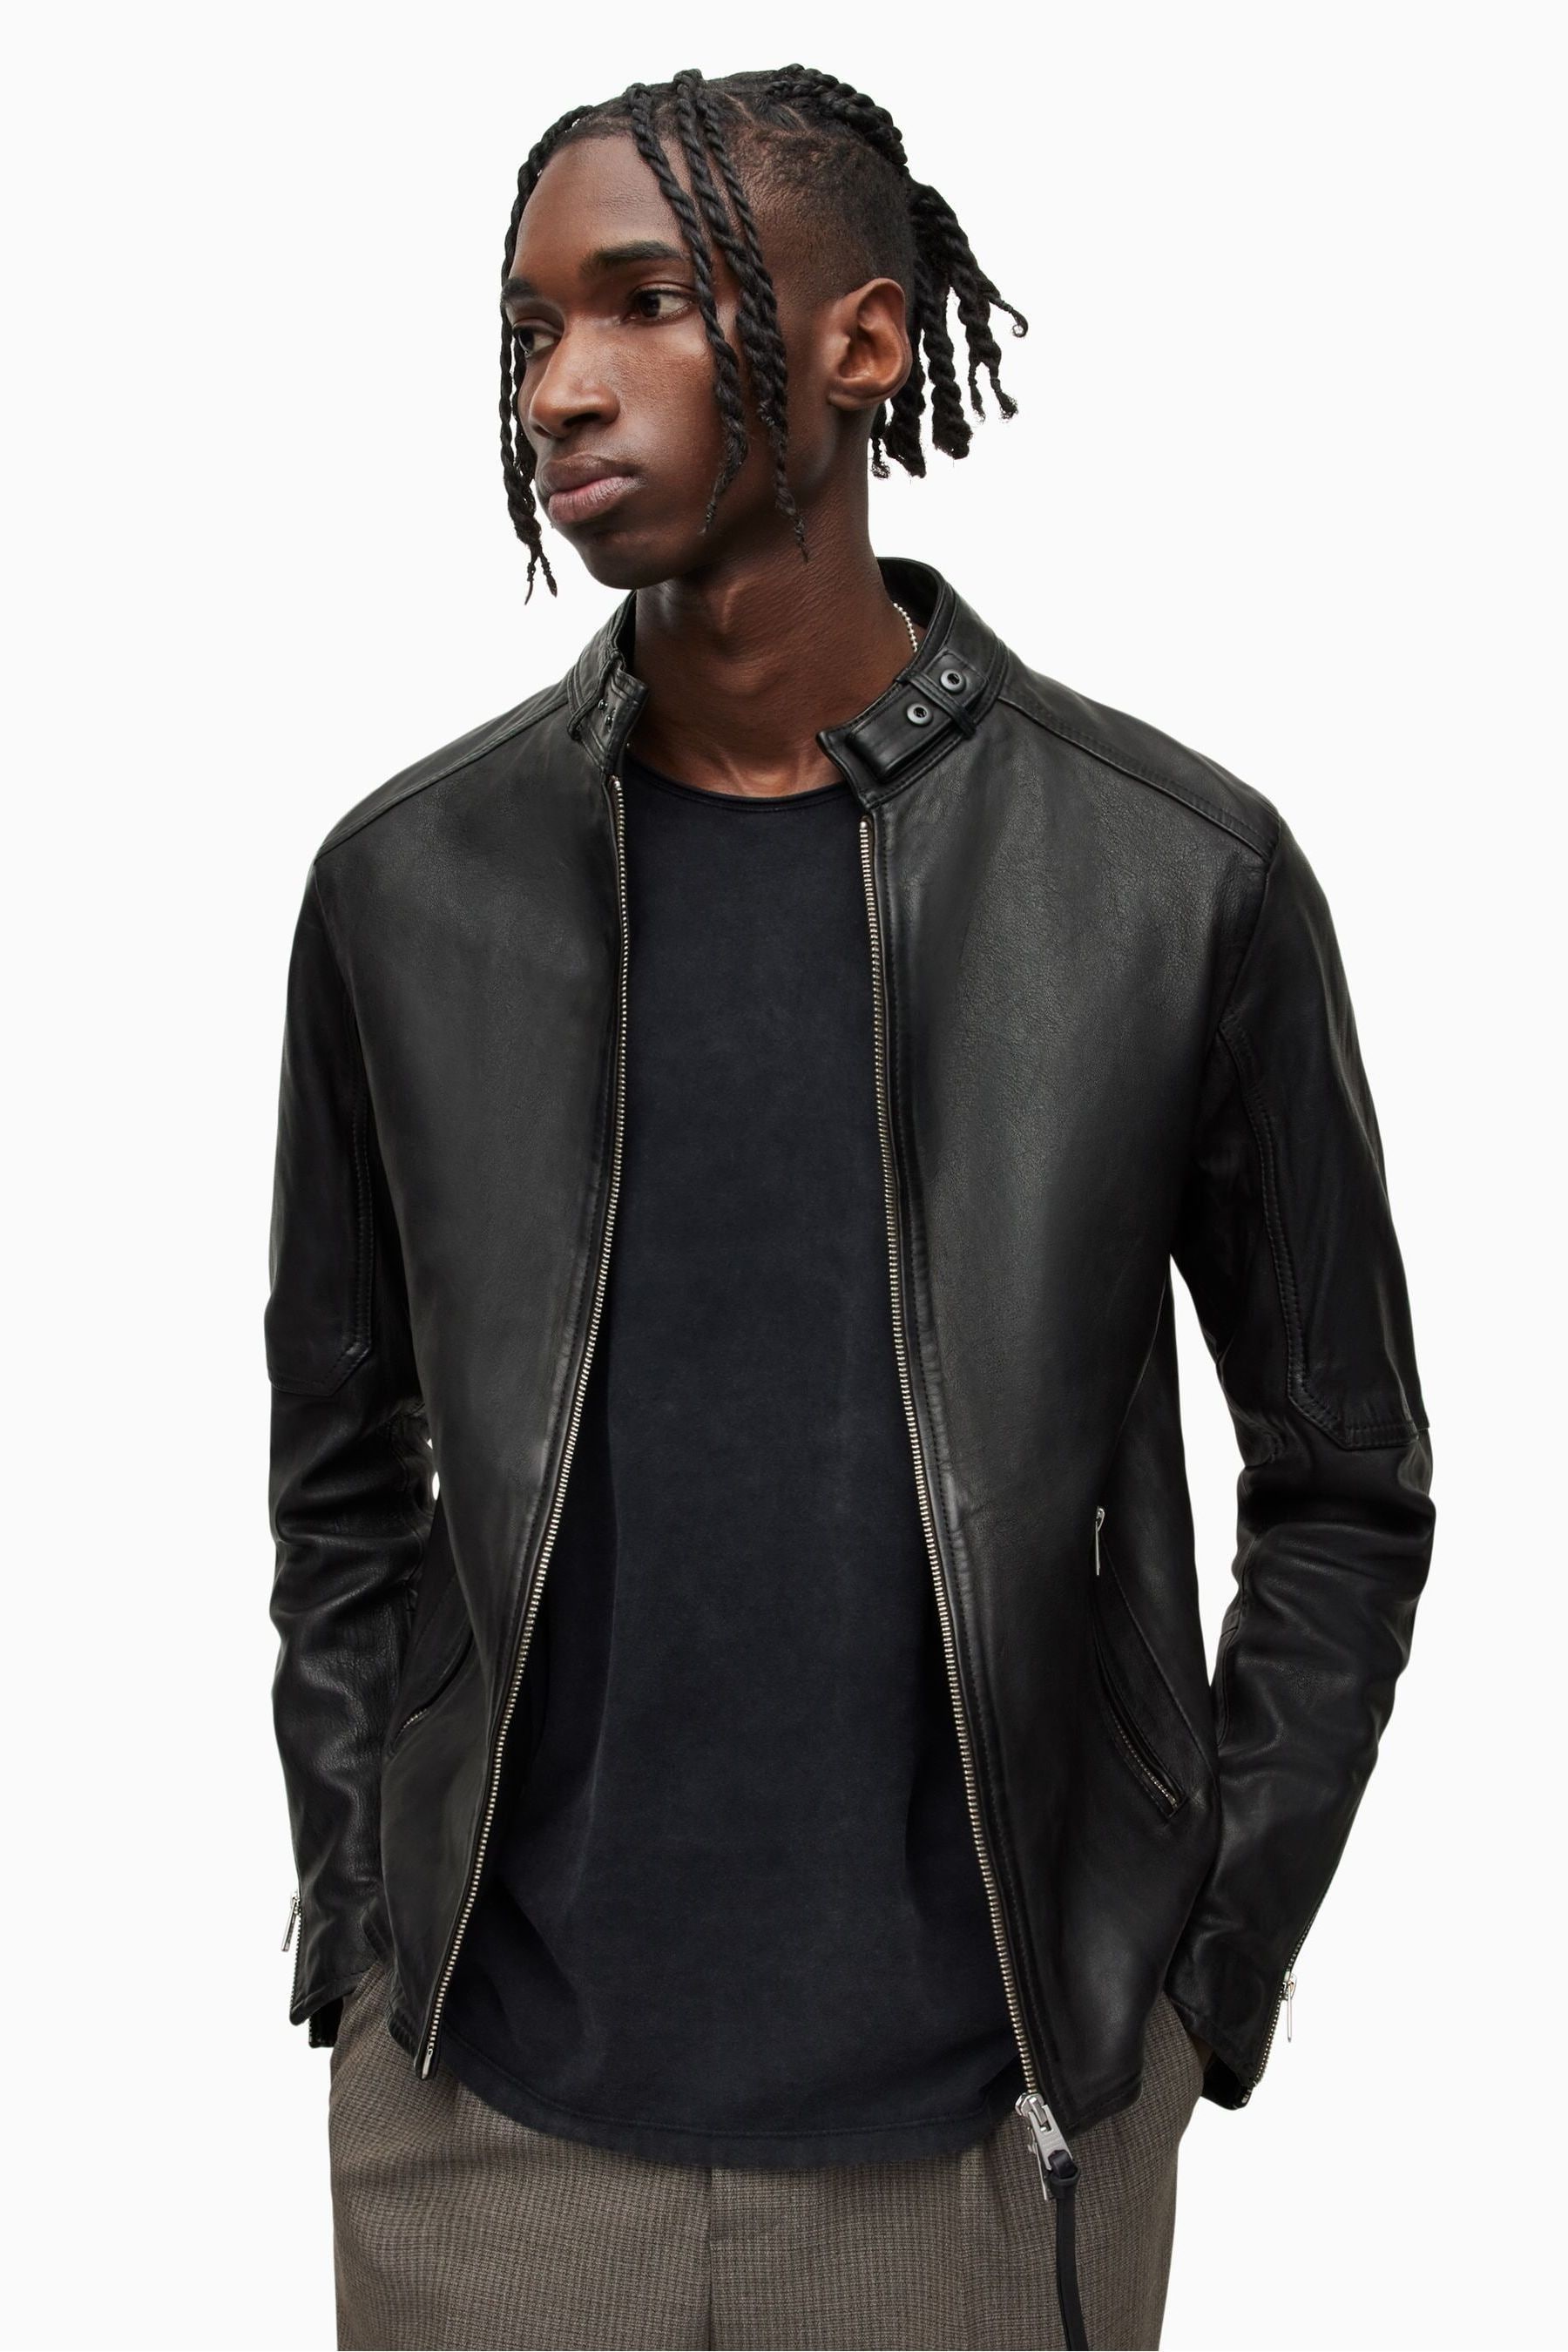 Buy AllSaints Cora Black Jacket from the Next UK online shop